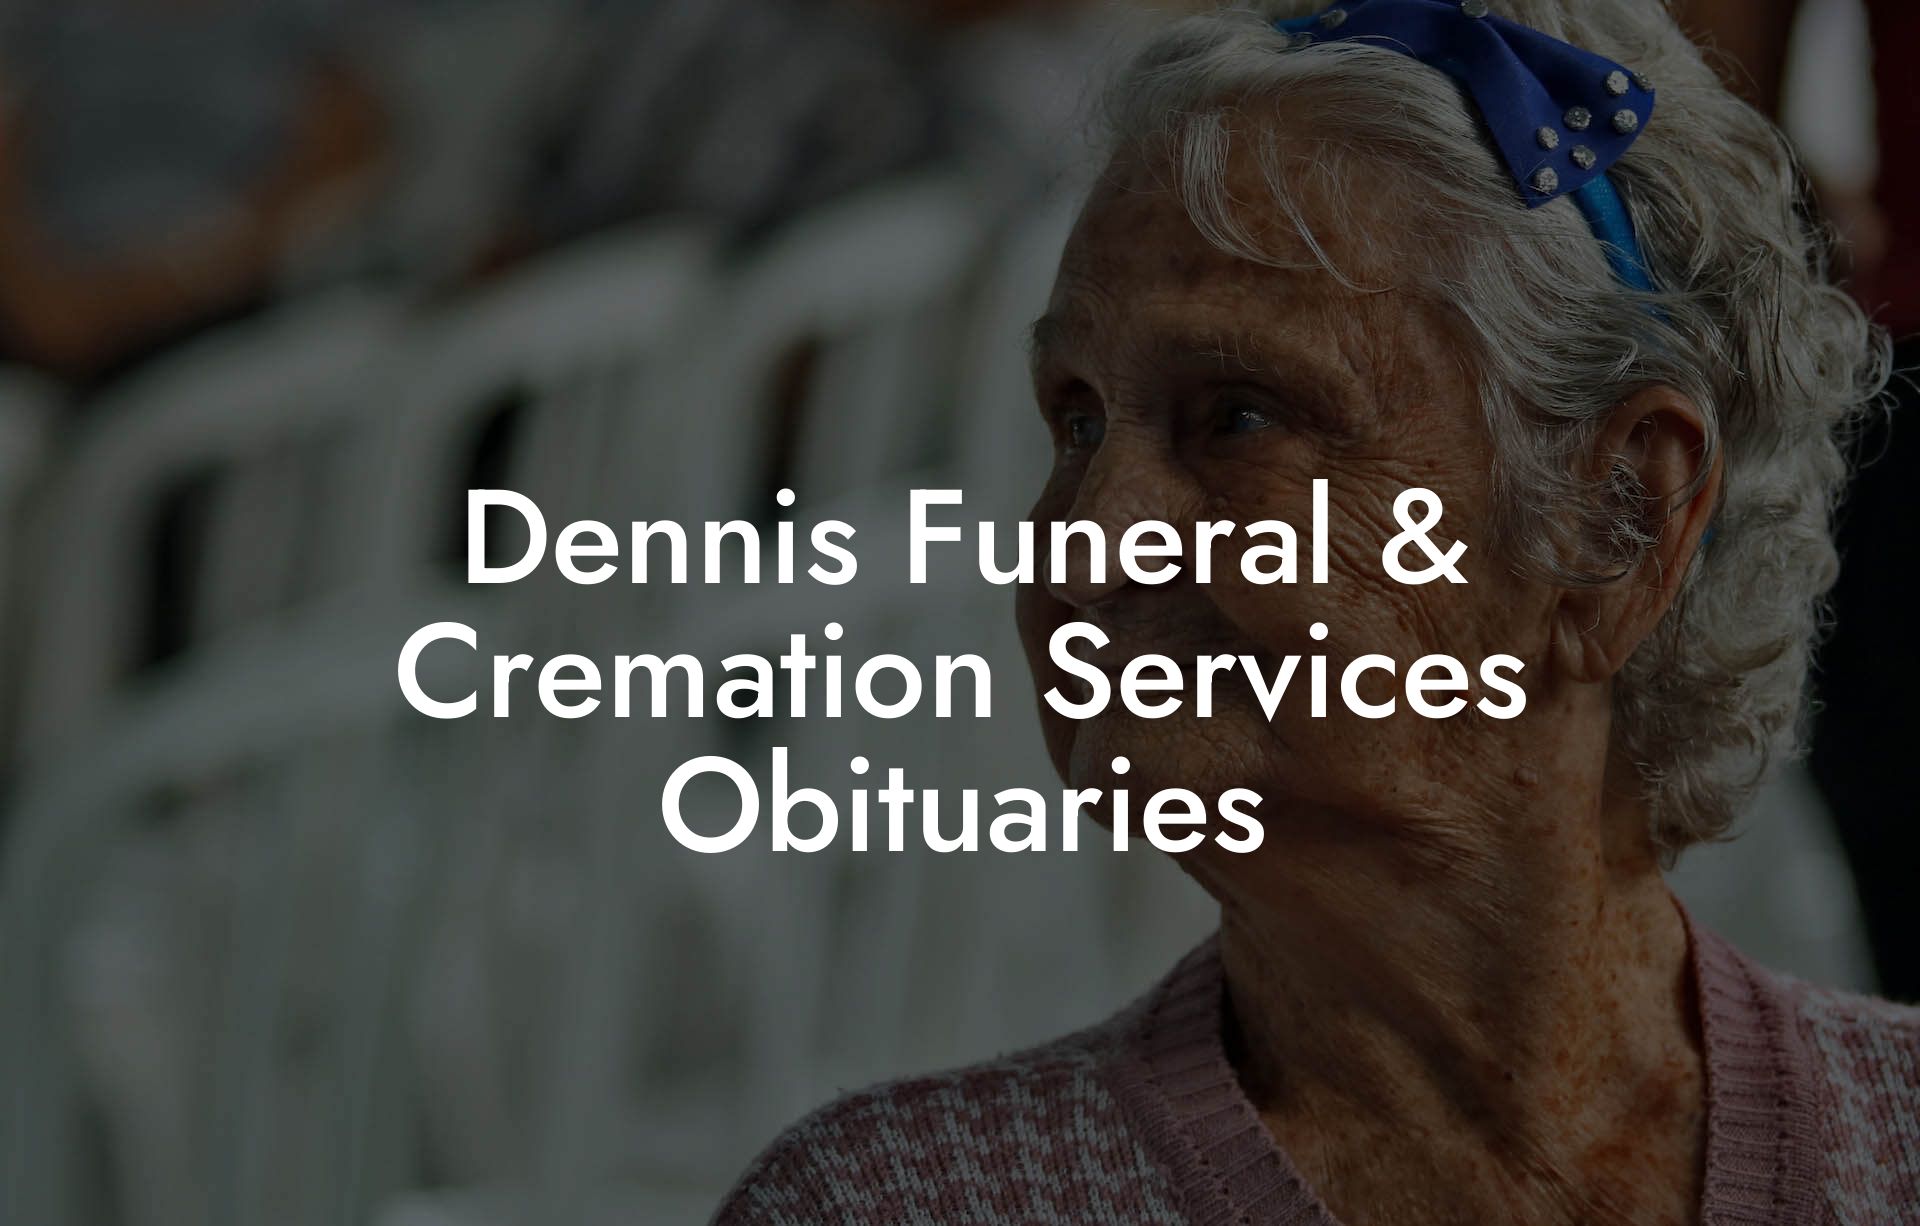 Dennis Funeral & Cremation Services Obituaries - Eulogy Assistant